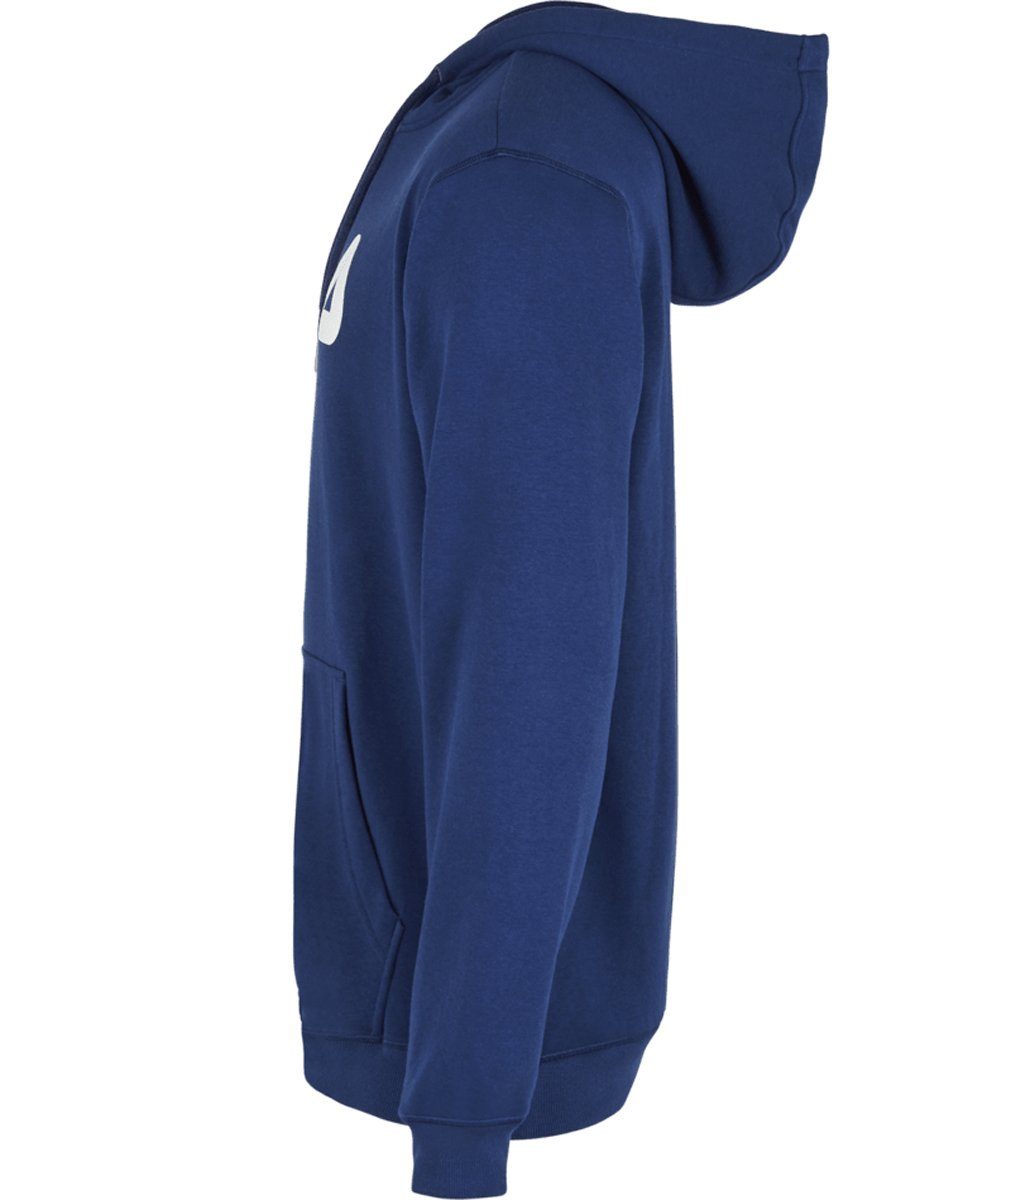 BARUMINI Hoodie Blau Sweater hoody, - Fila Sweatshirt Unisex